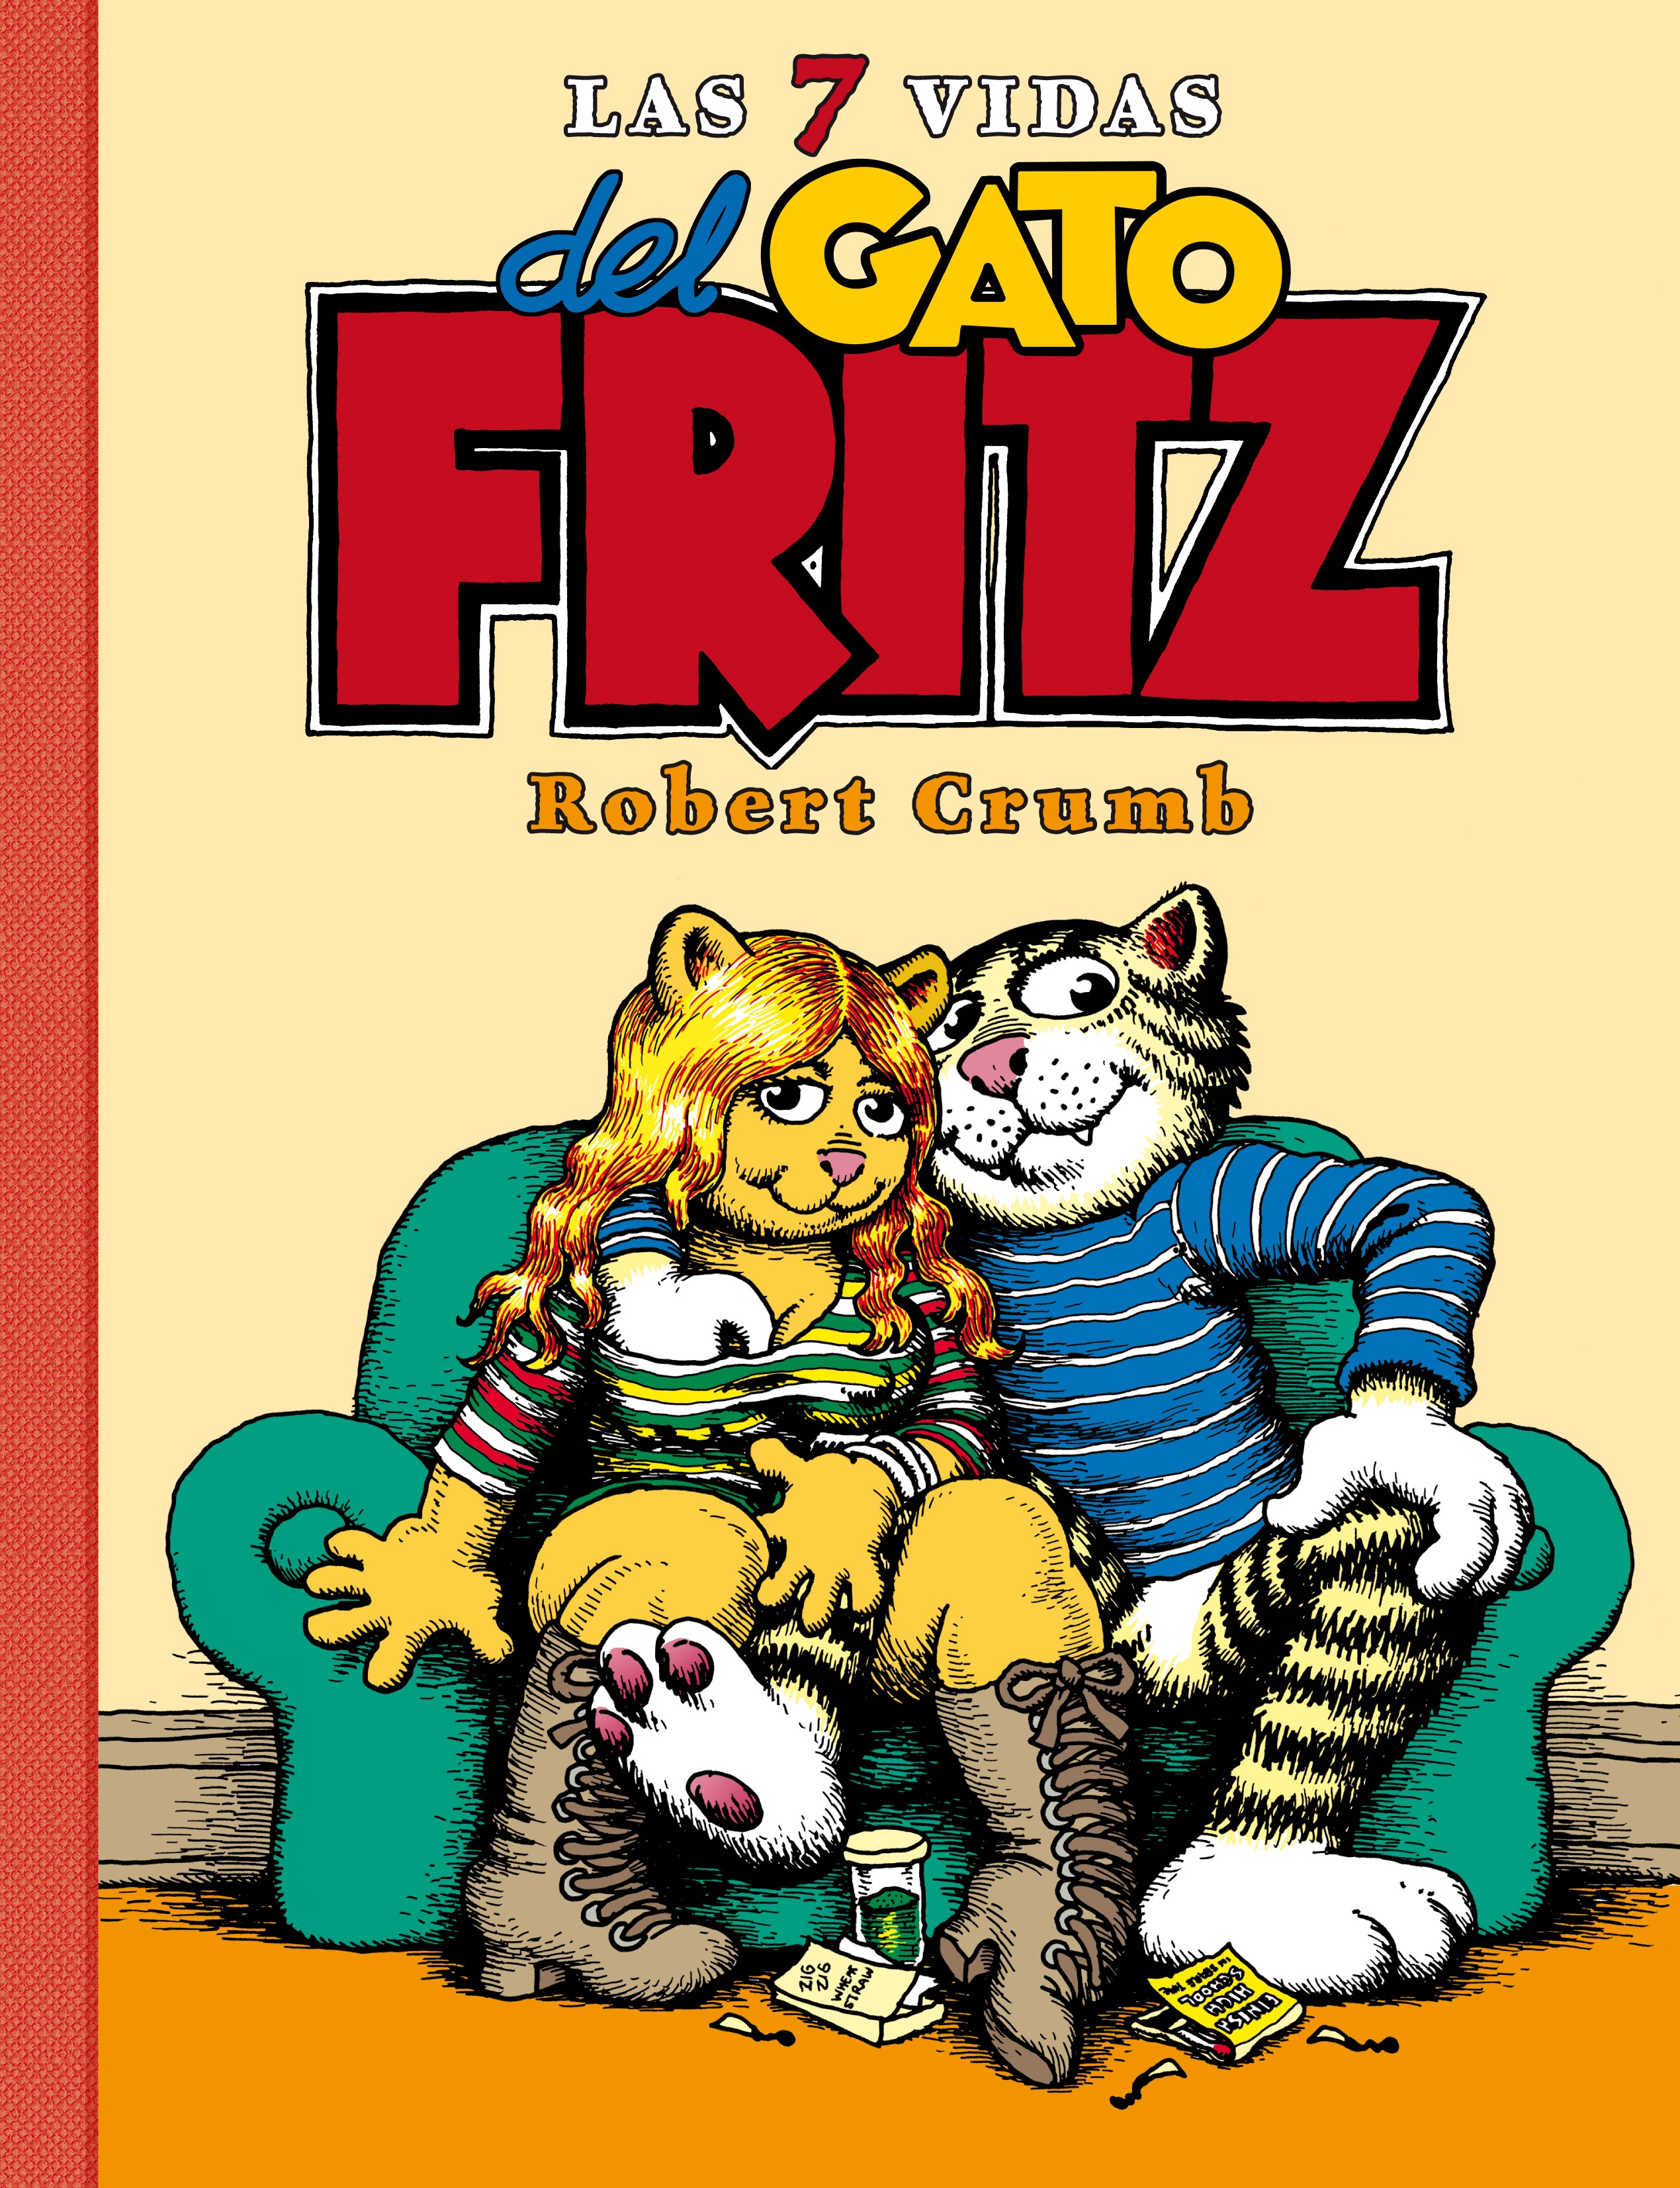 Robert-Crumb-Las--vidas-del-Gato-Fritz-cubierta